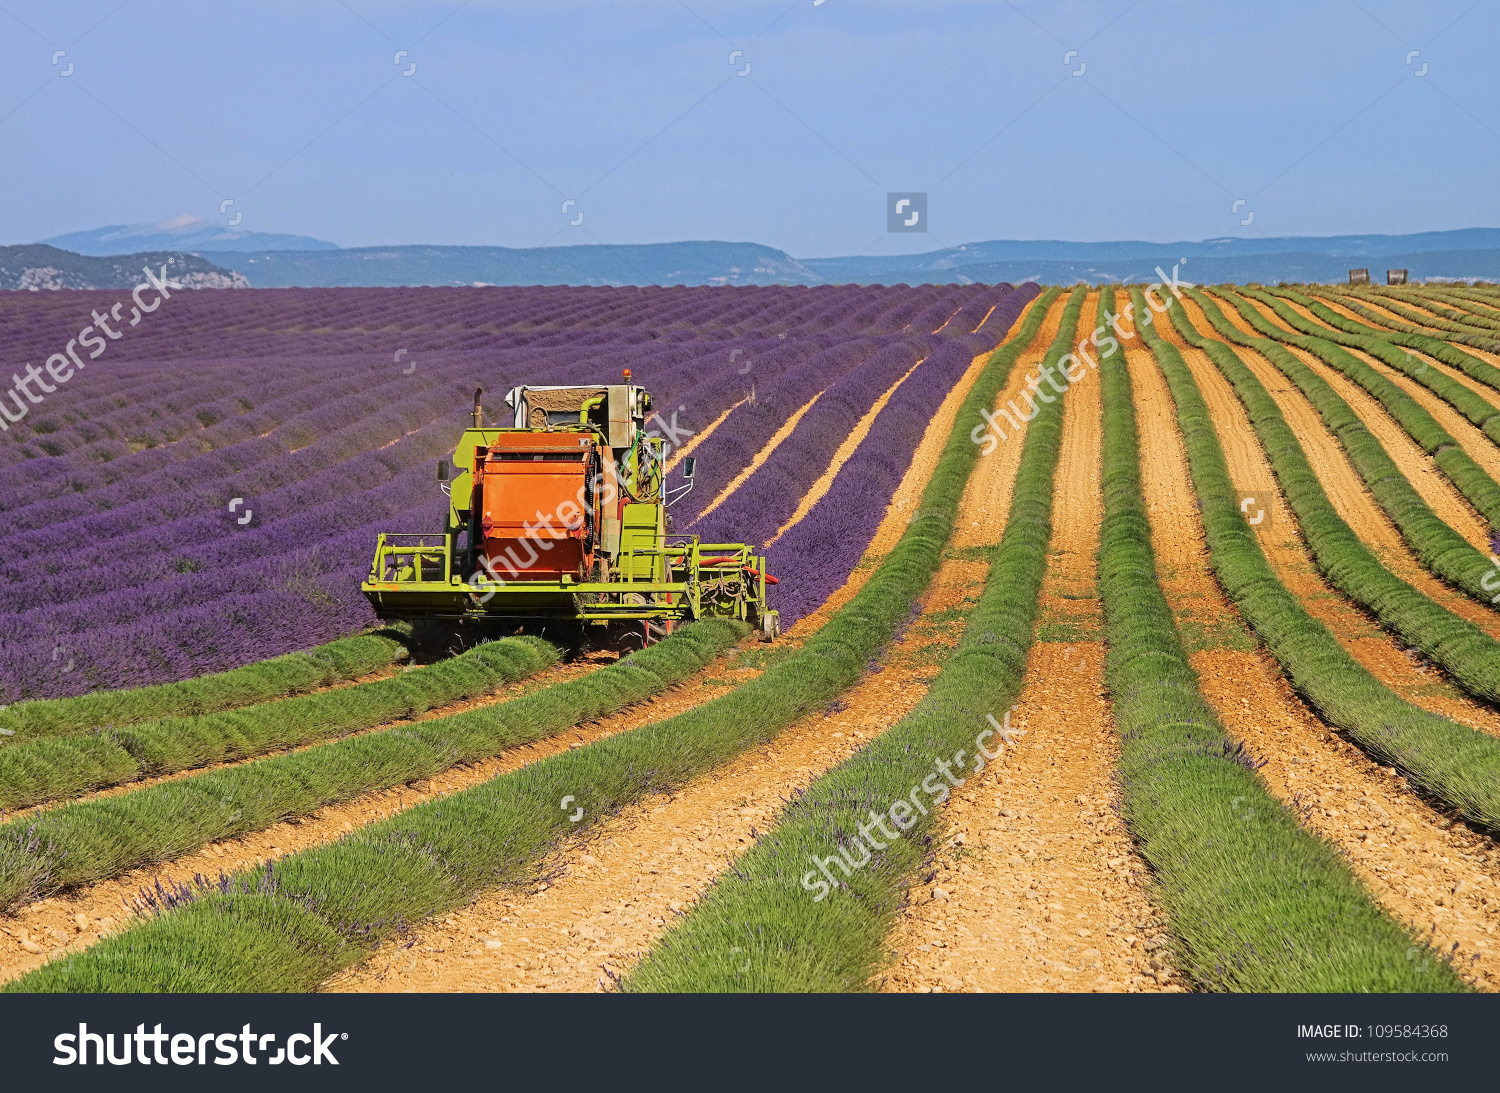 Lavender Field Harvest Stock Photo 109584368 : Shutterstock.